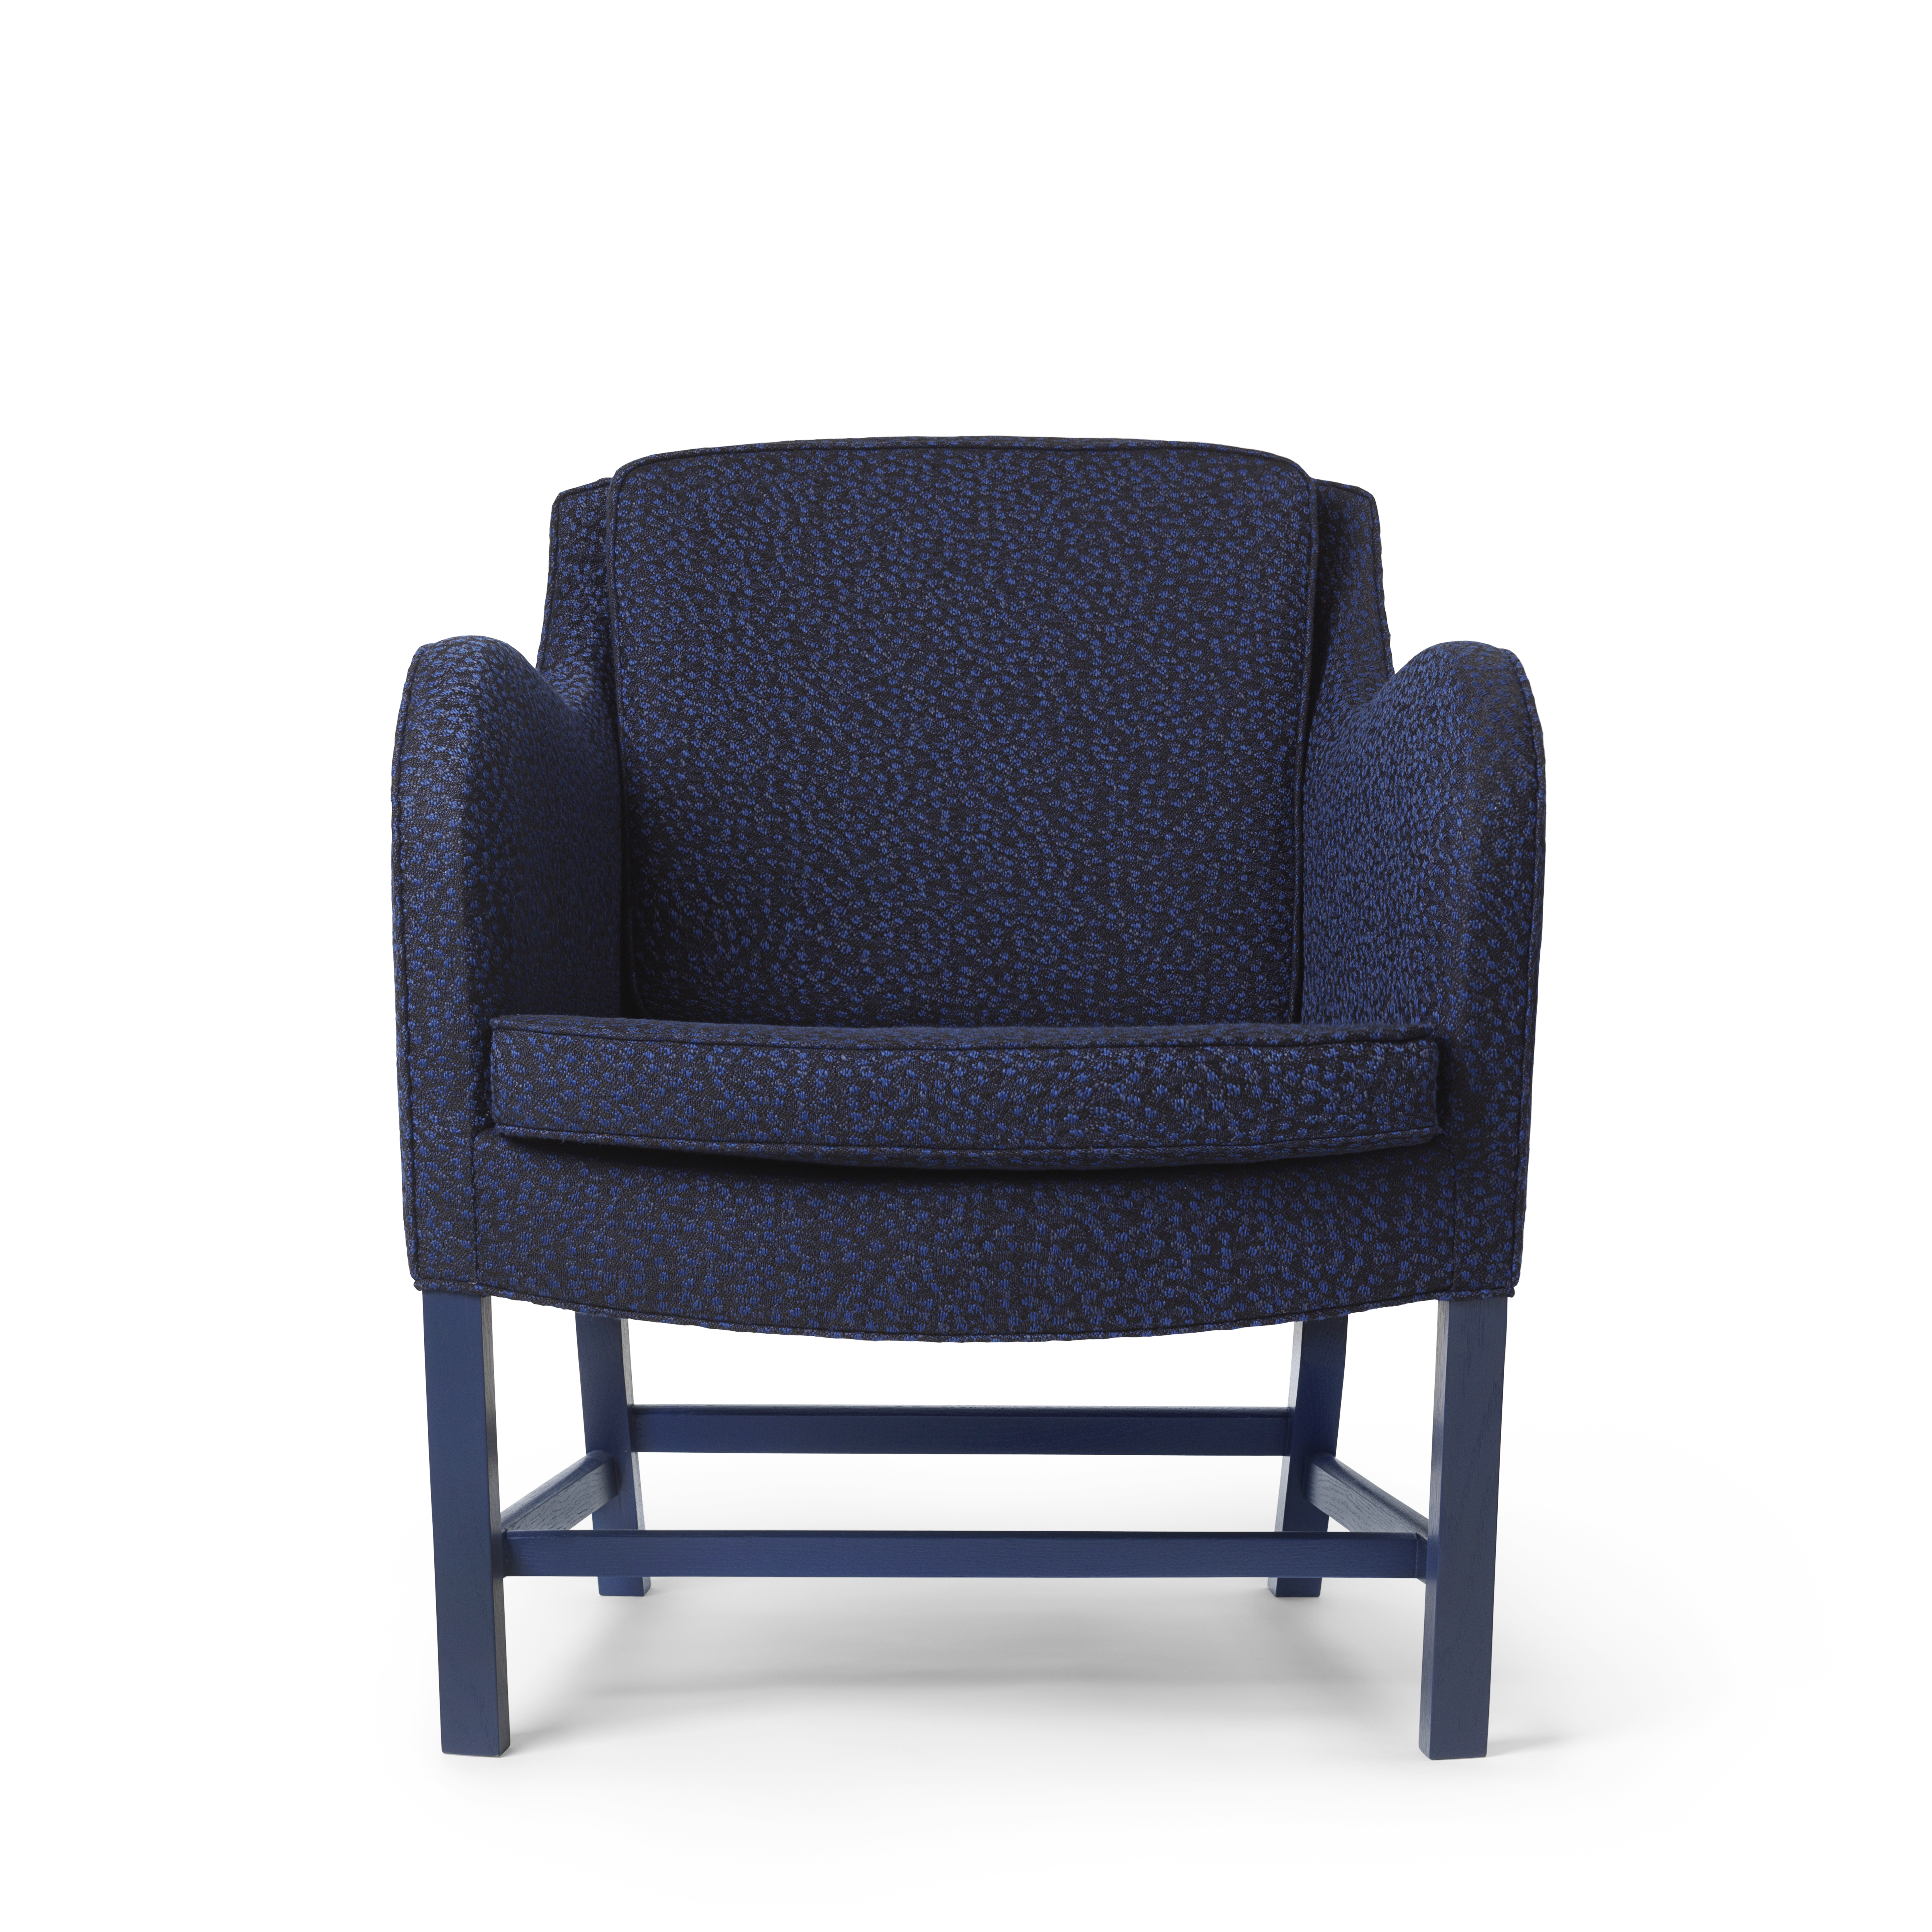 KK43960 | Mix Chair Exclusive